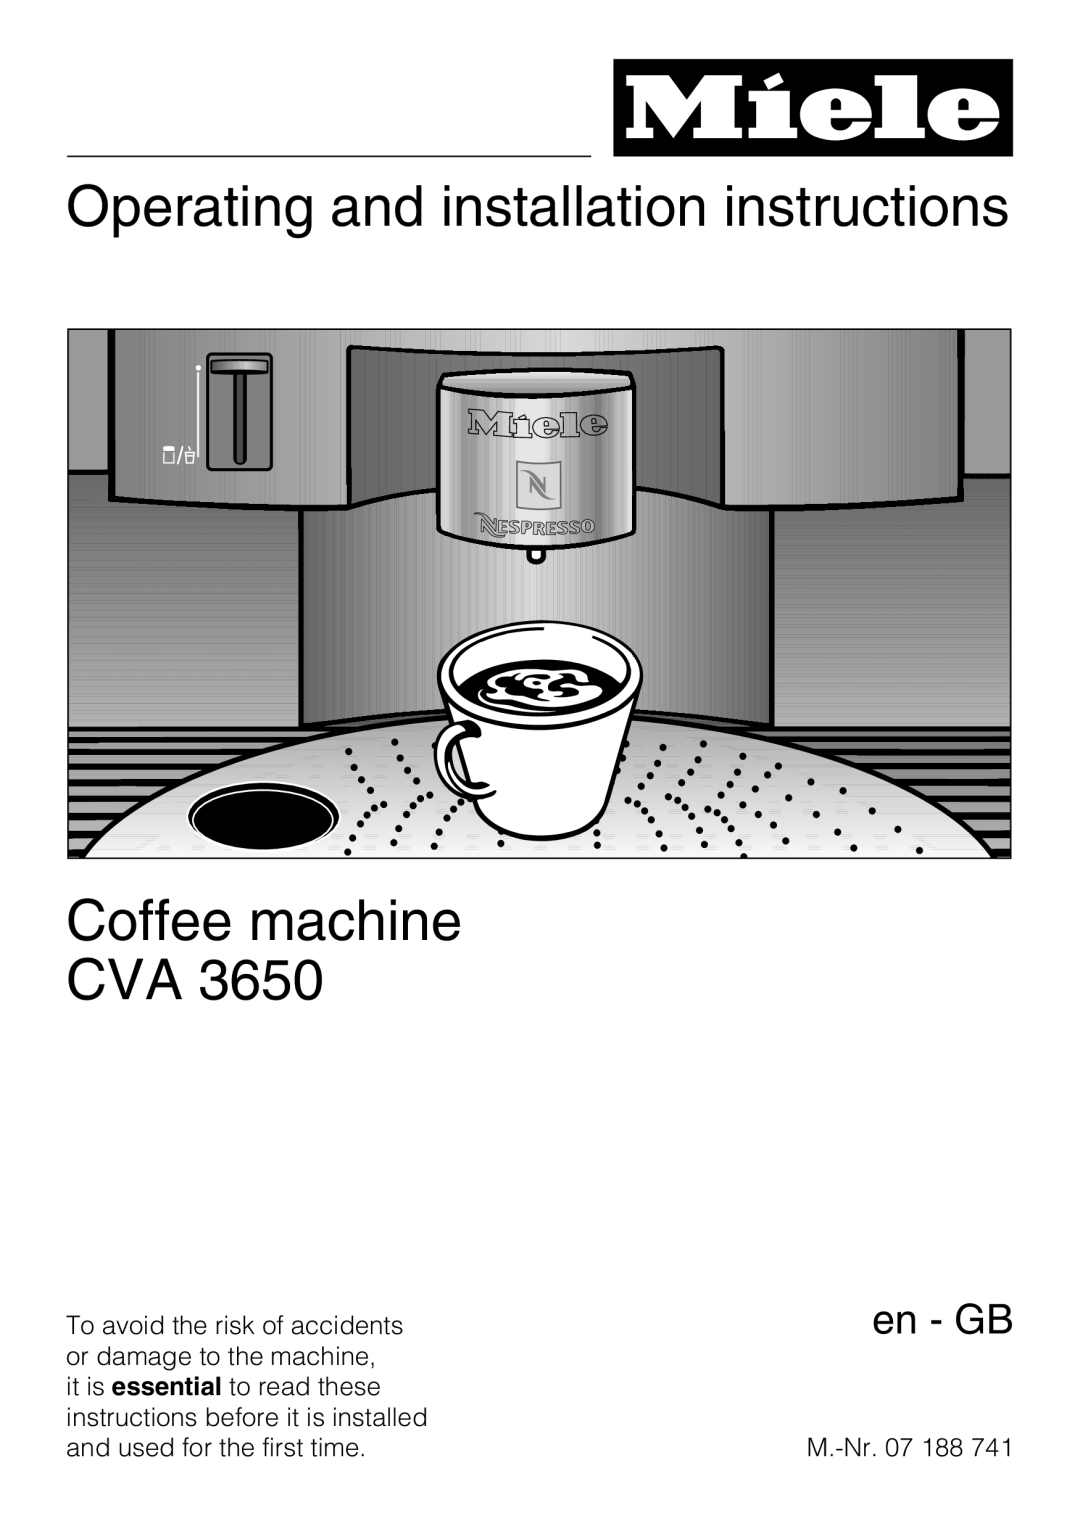 Miele CVA 3650 installation instructions Operating and installation instructions, Coffee machine CVA, en - GB 